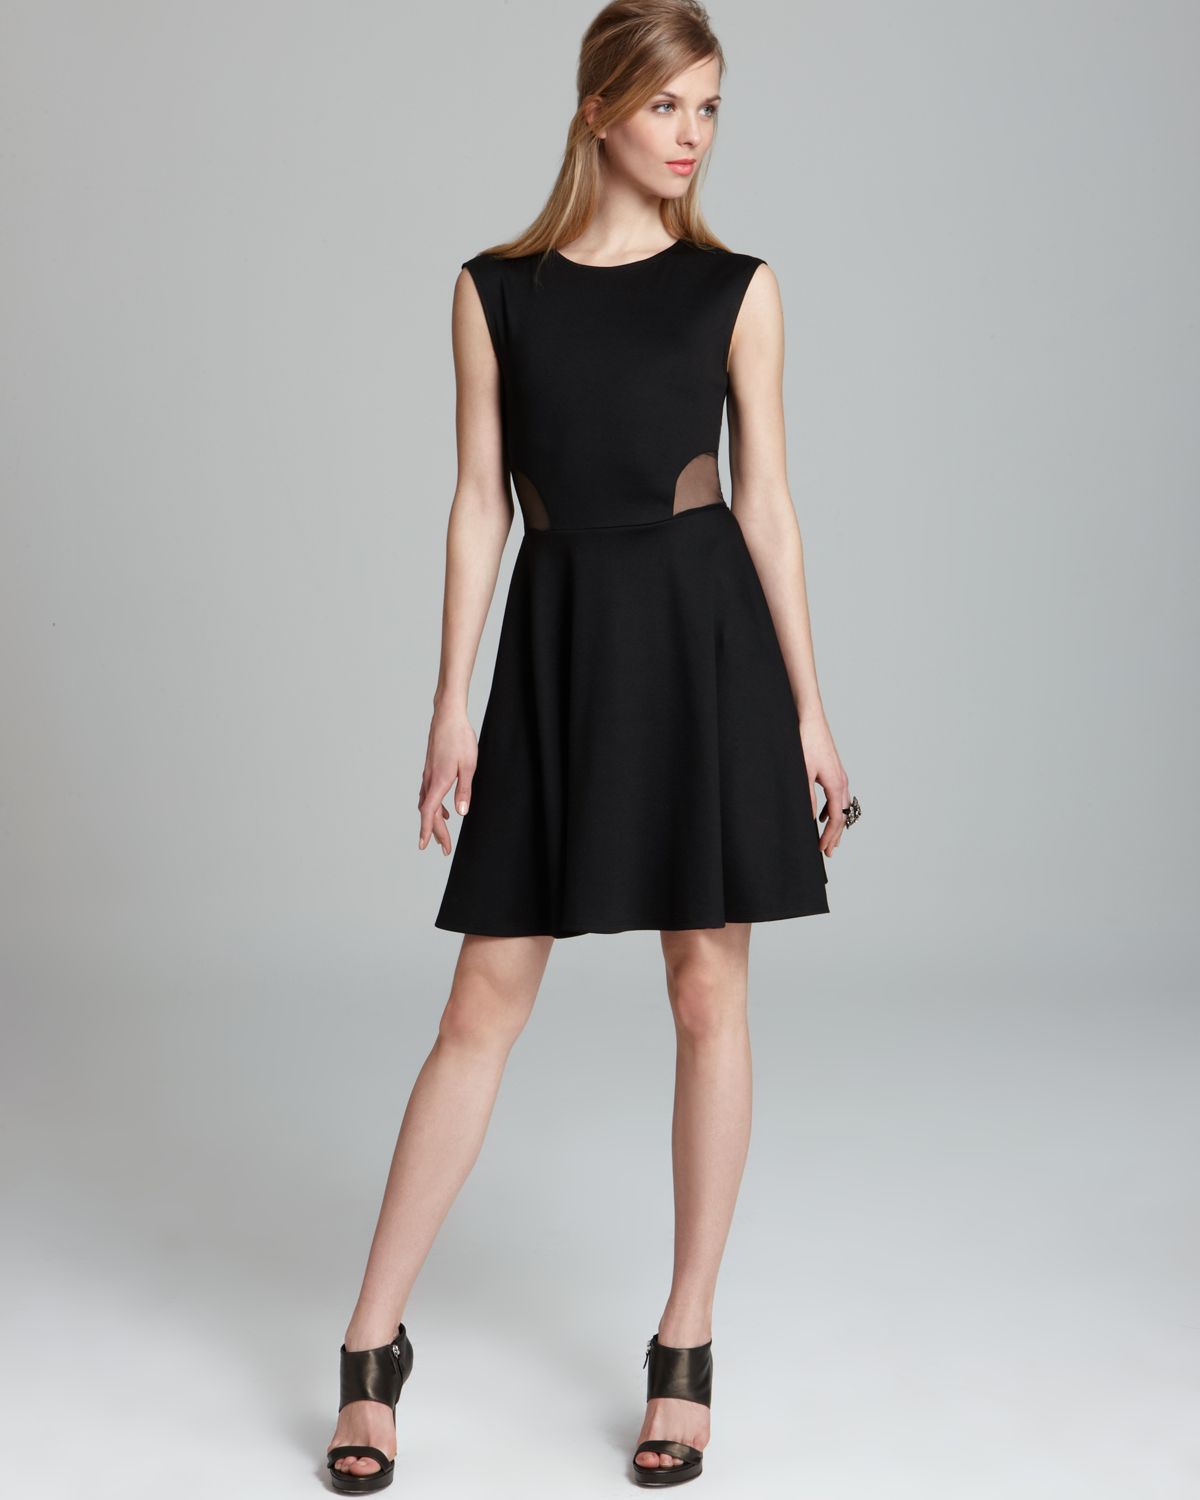 Lyst - Aqua Cutout Dress - Mesh Ponte Circle Skirt in Black